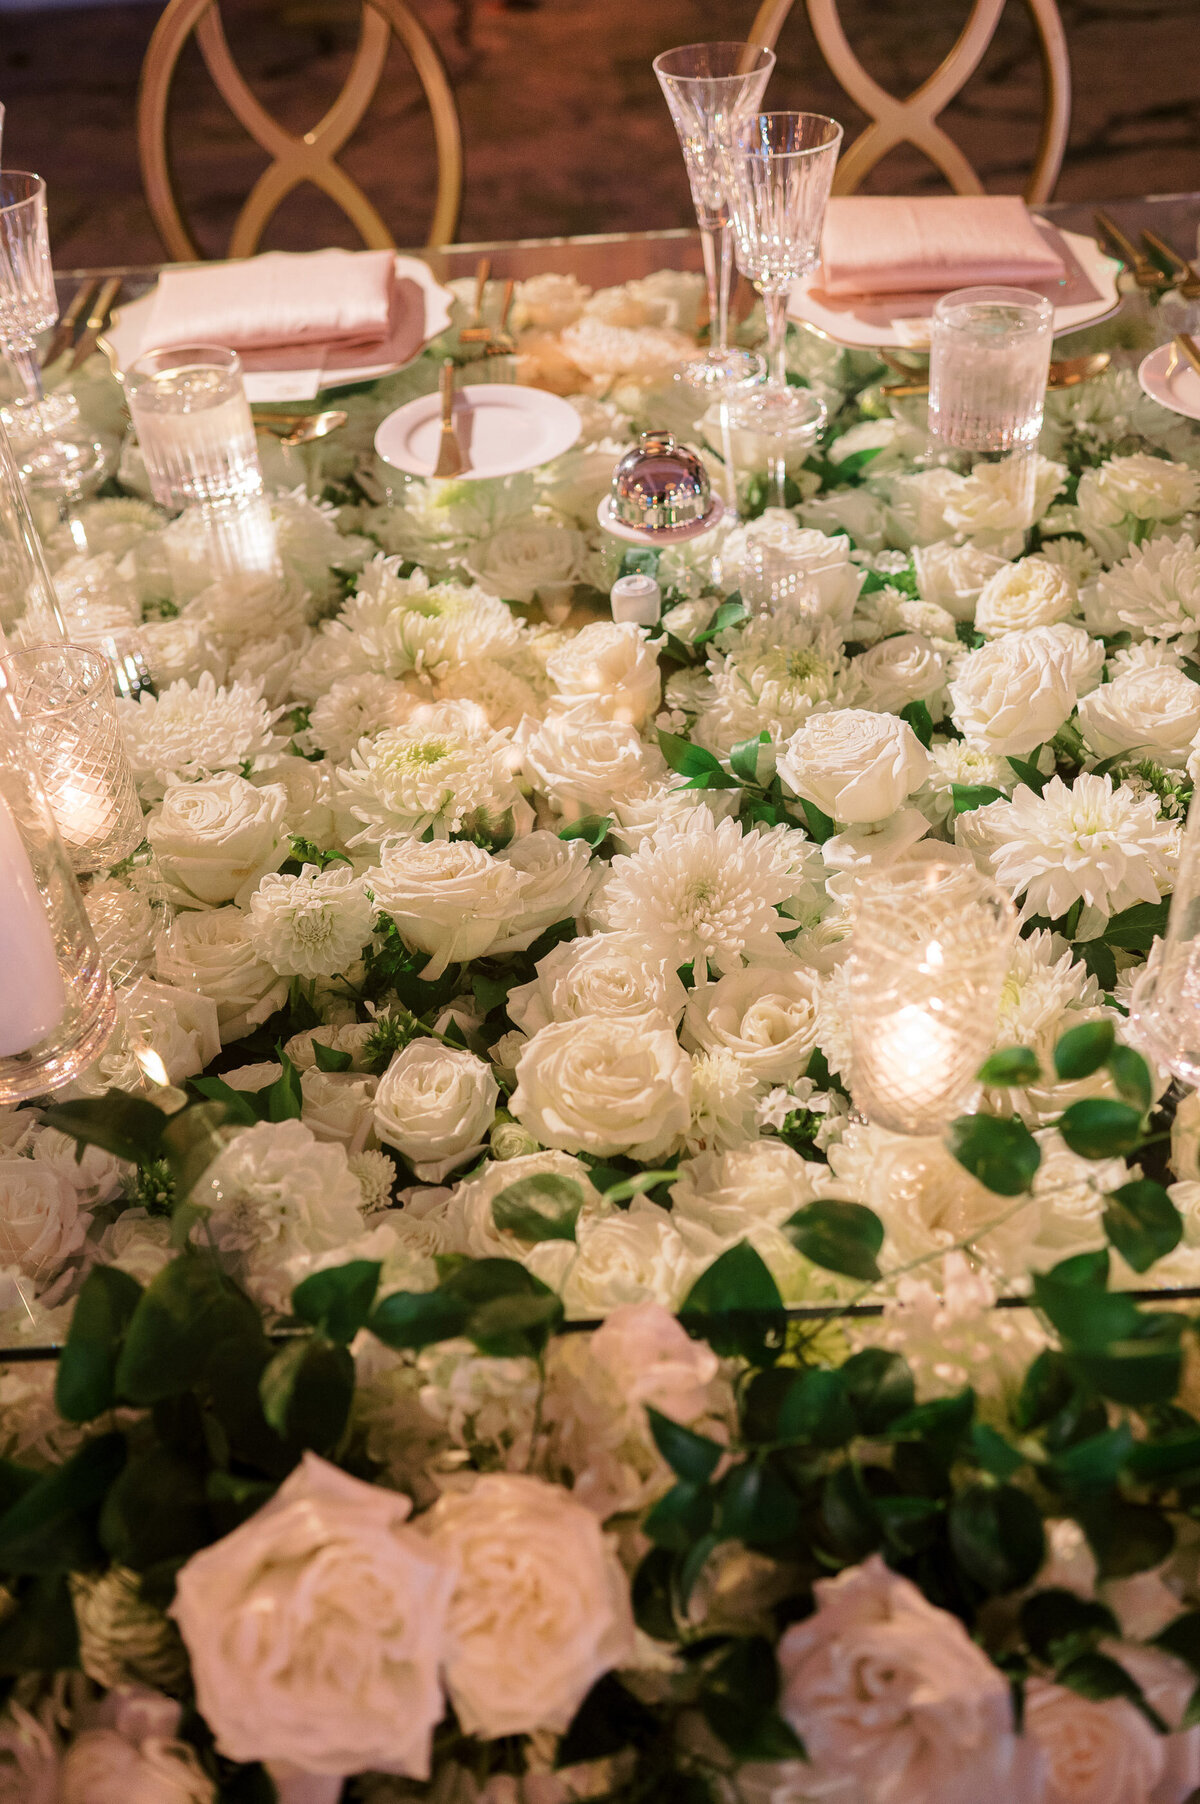 Kate-Murtaugh-Events-Boston-wedding-floral-table